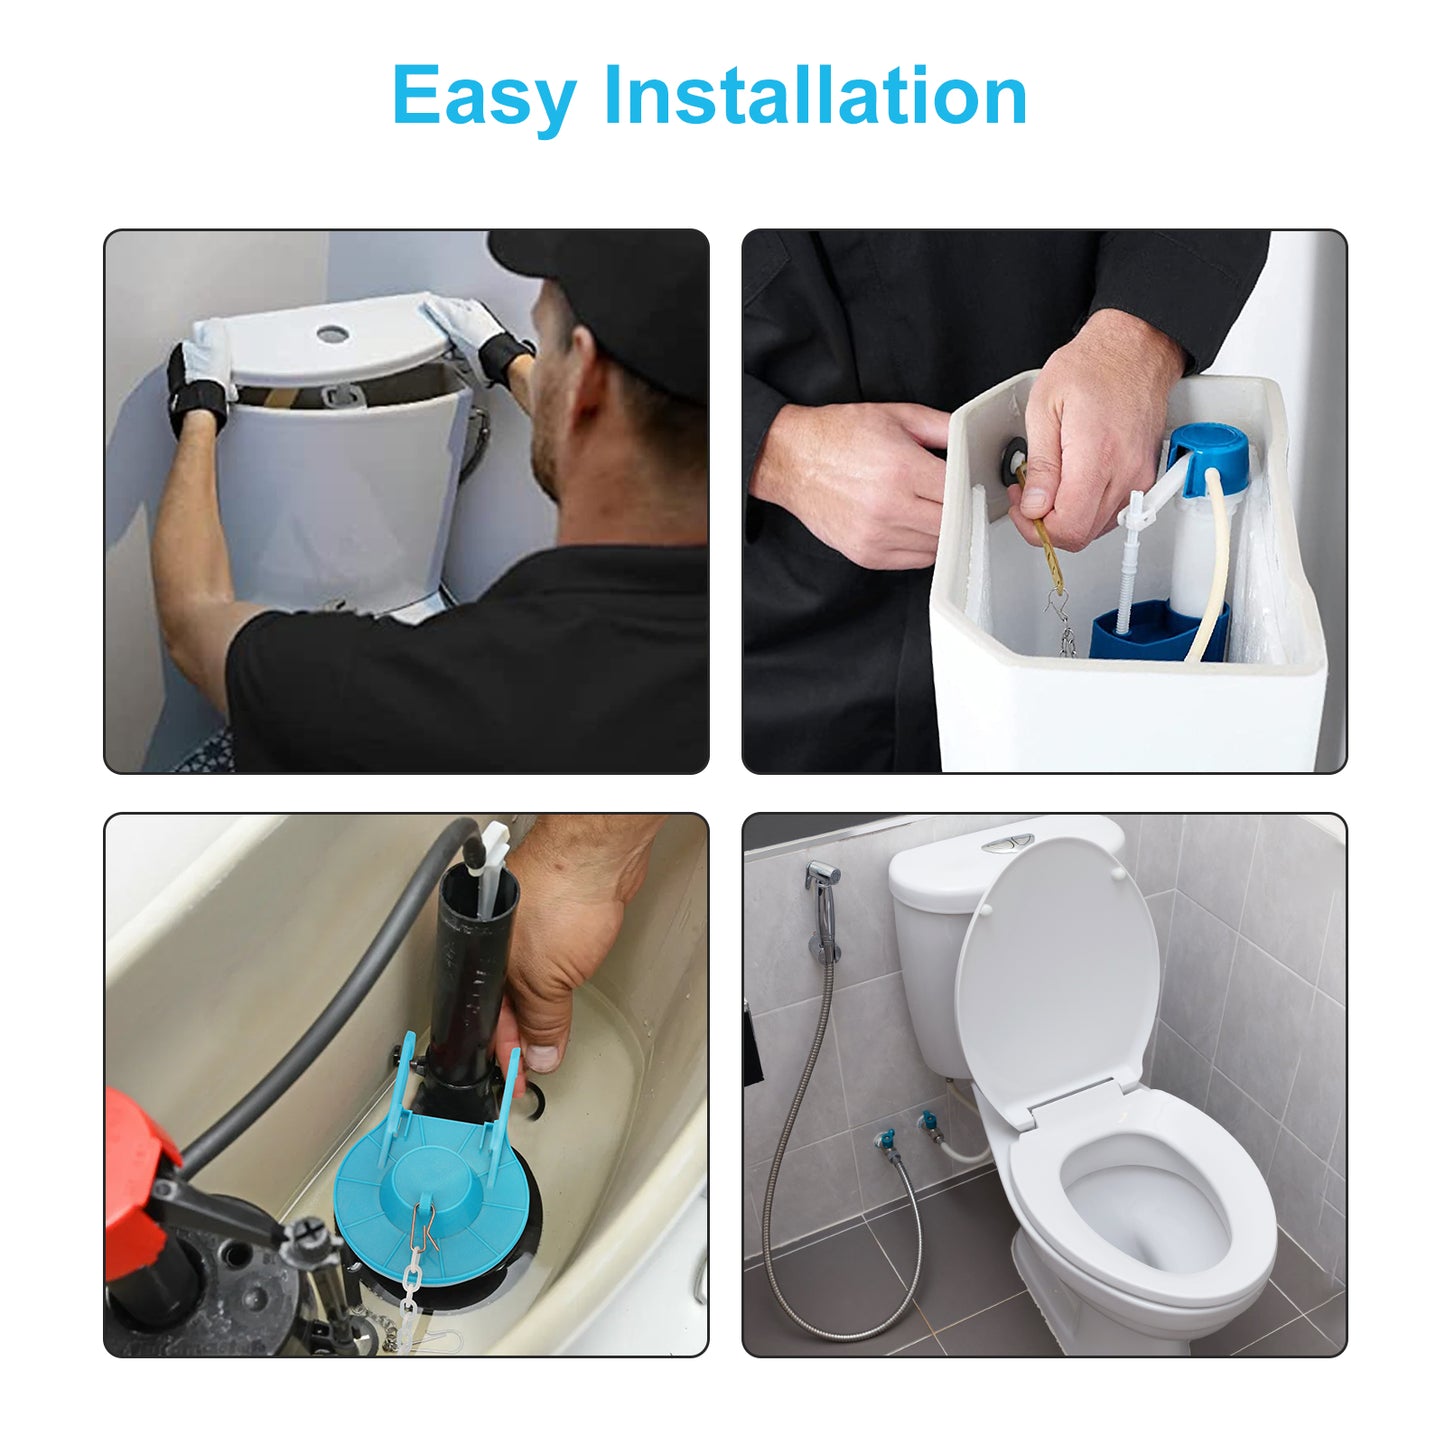 2Pcs 2 inch Flush Valves Toilet Flapper Replacement - Toilet Wrench Toilet Bowl Handle Toilet Tank Hinge Flapper Repair Part,Compatible with American Standard 2“ Flapper